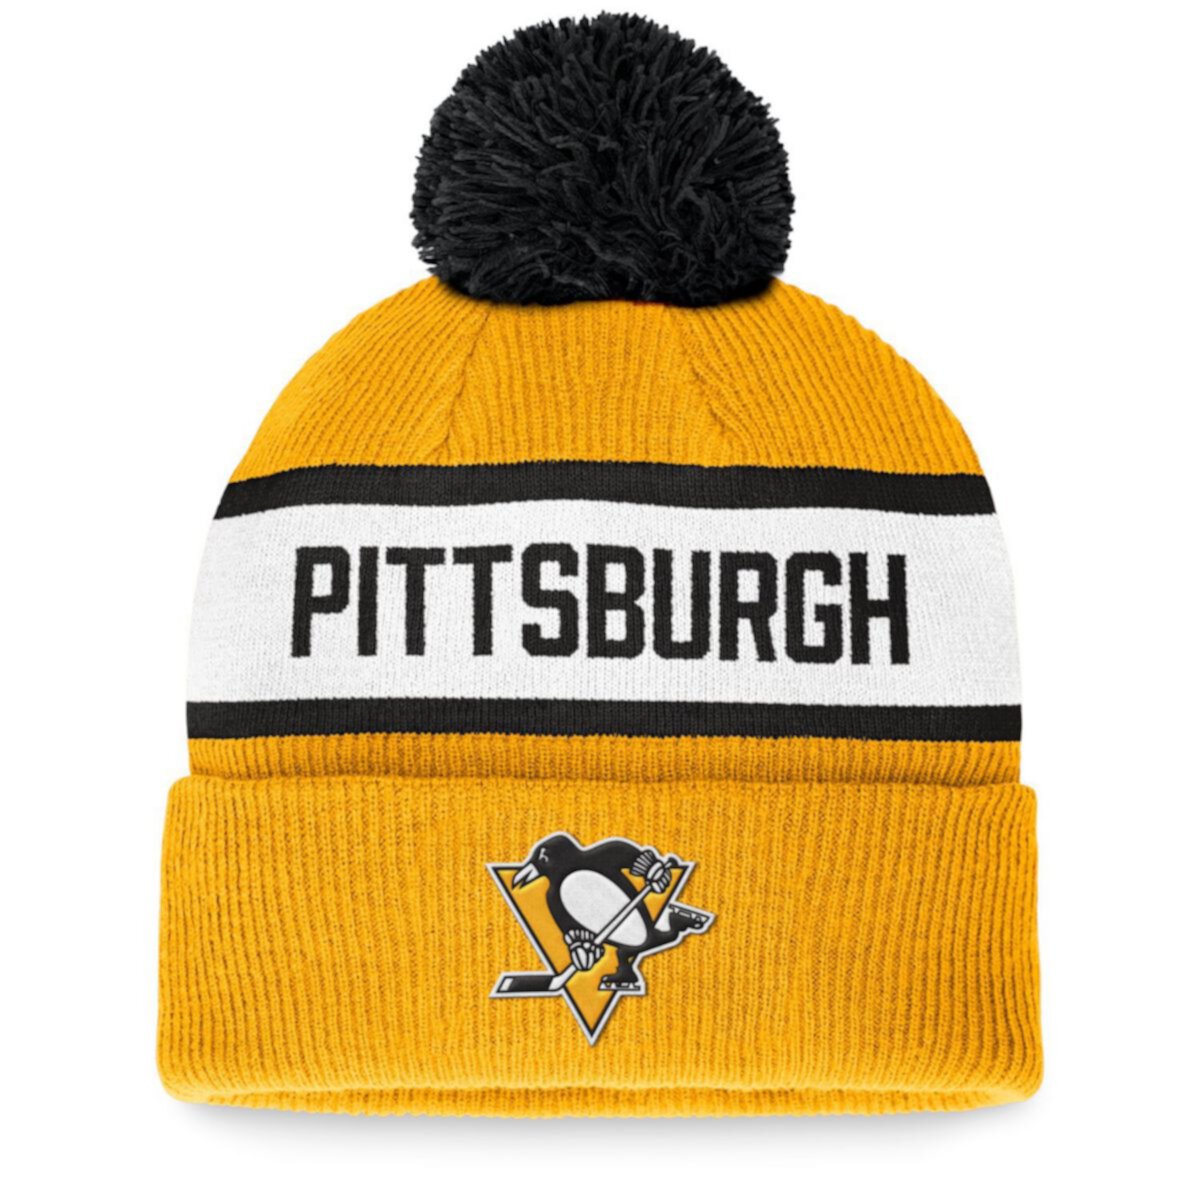 Men's Fanatics Branded Gold Pittsburgh Penguins Fundamental Wordmark Cuffed Knit Hat with Pom Fanatics